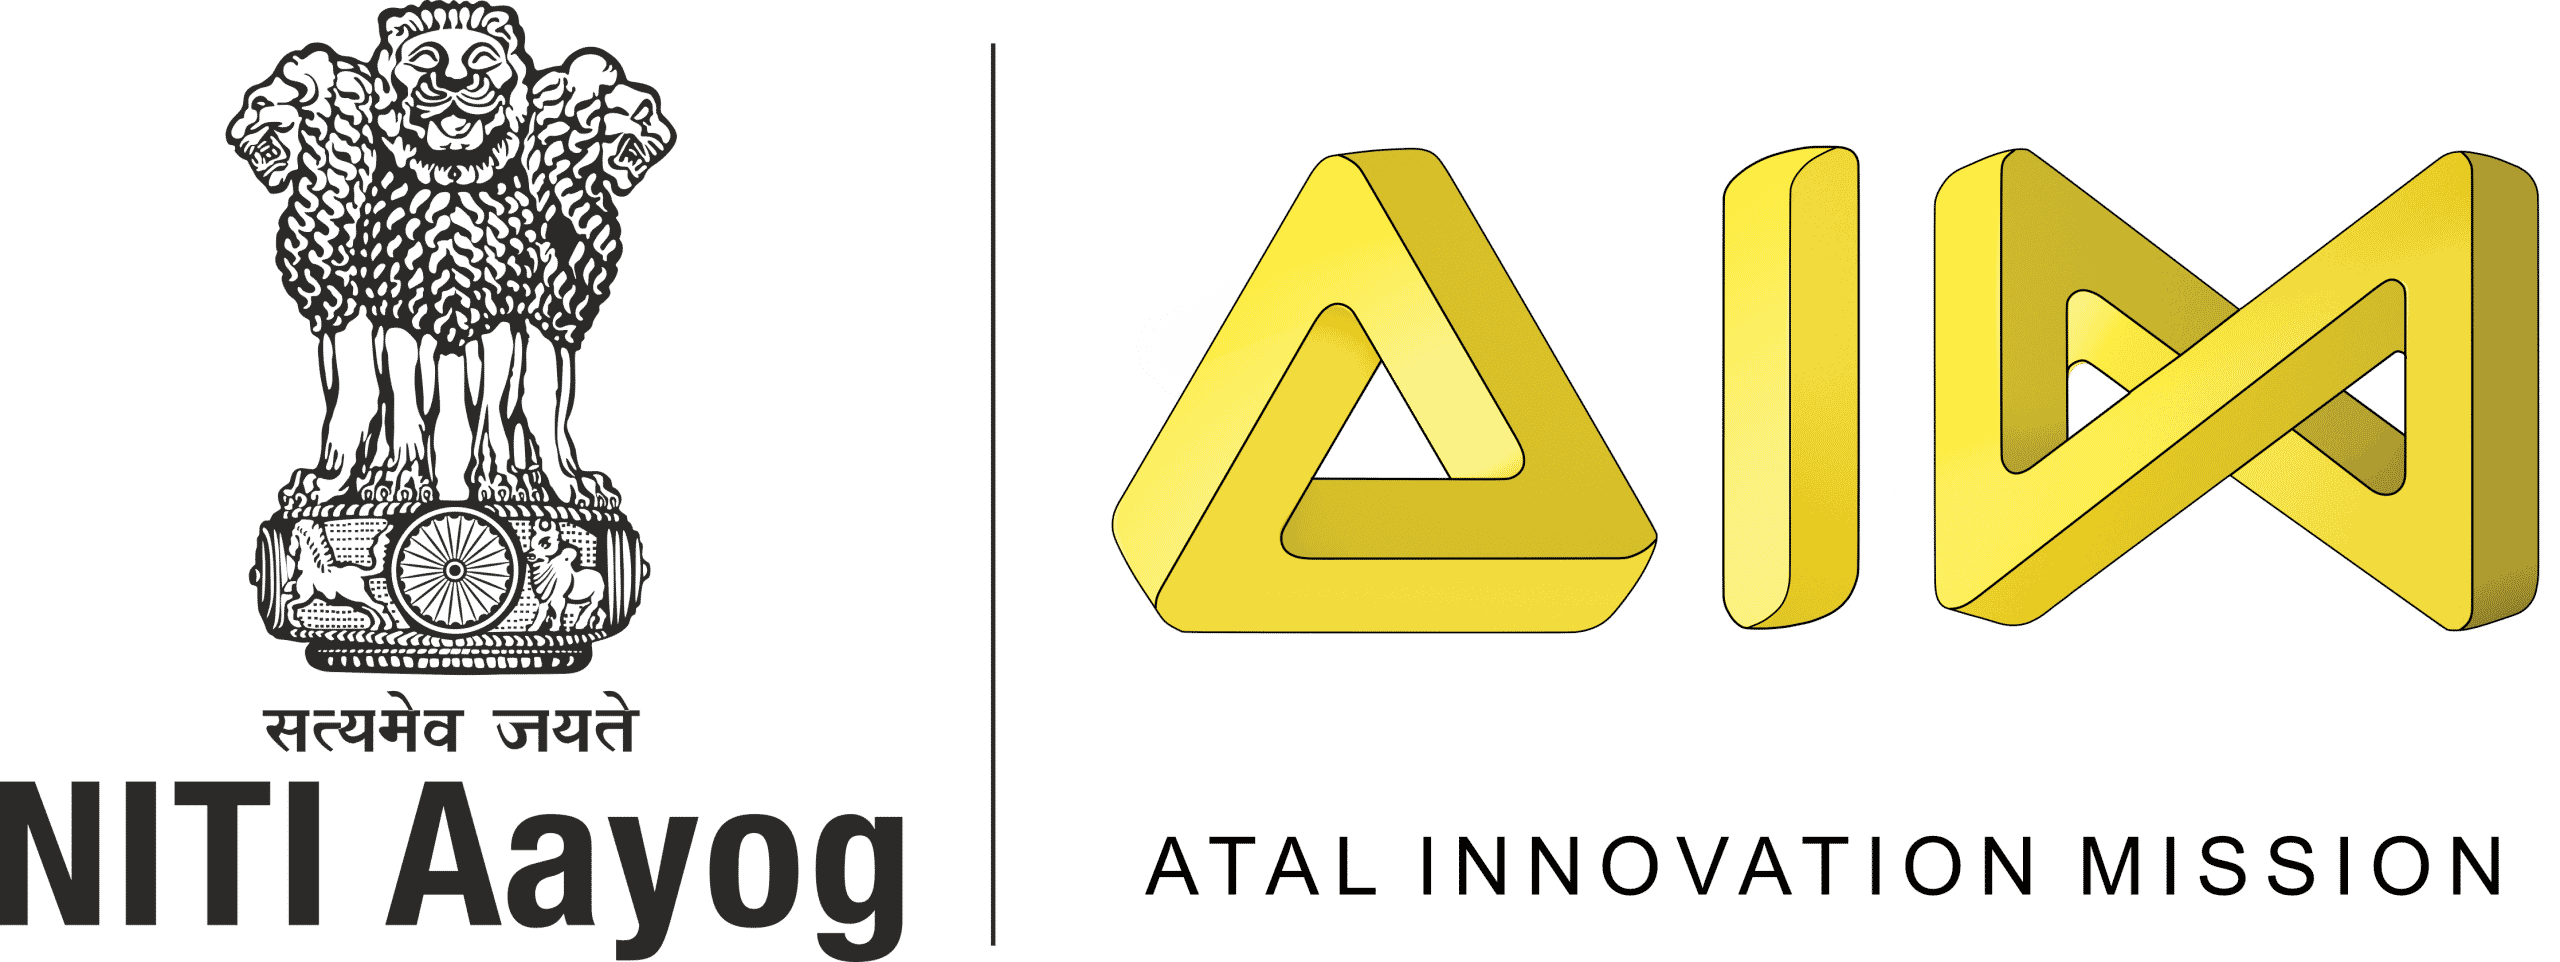 Atal Innovation Mission Official Logo with black Satyamev Jayate Emblem